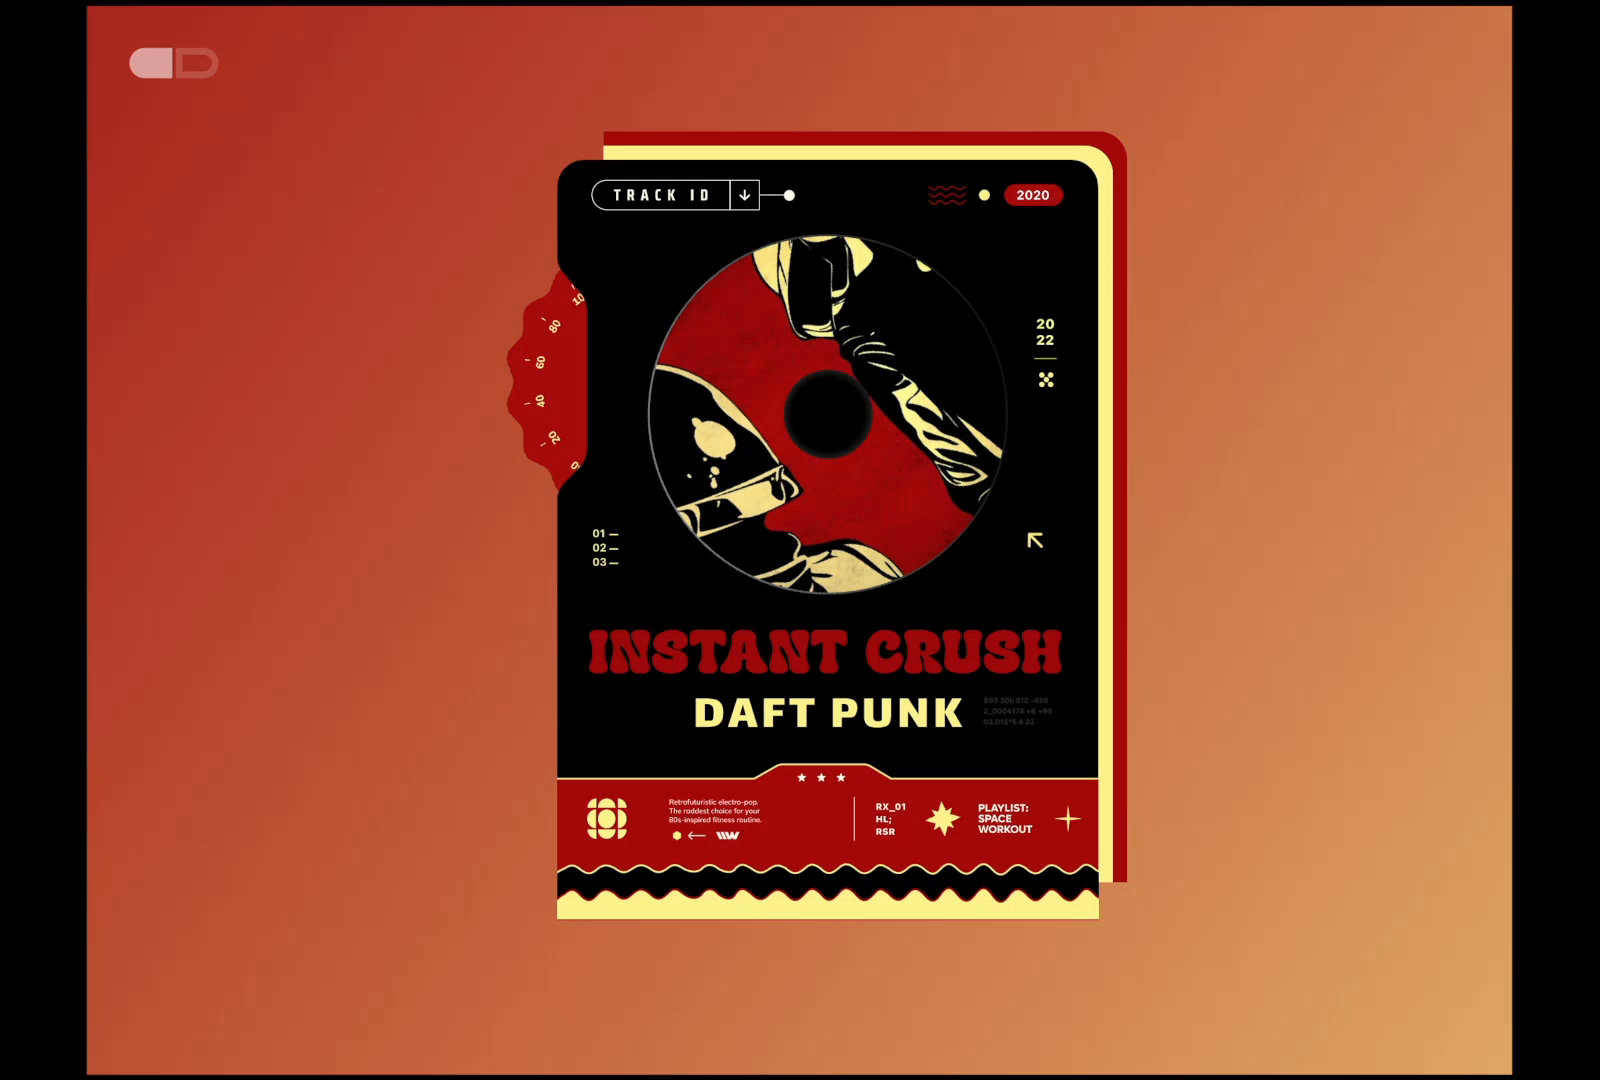 Daft Punk - Instant Crush Visualizer by Adidev Dutta on Dribbble